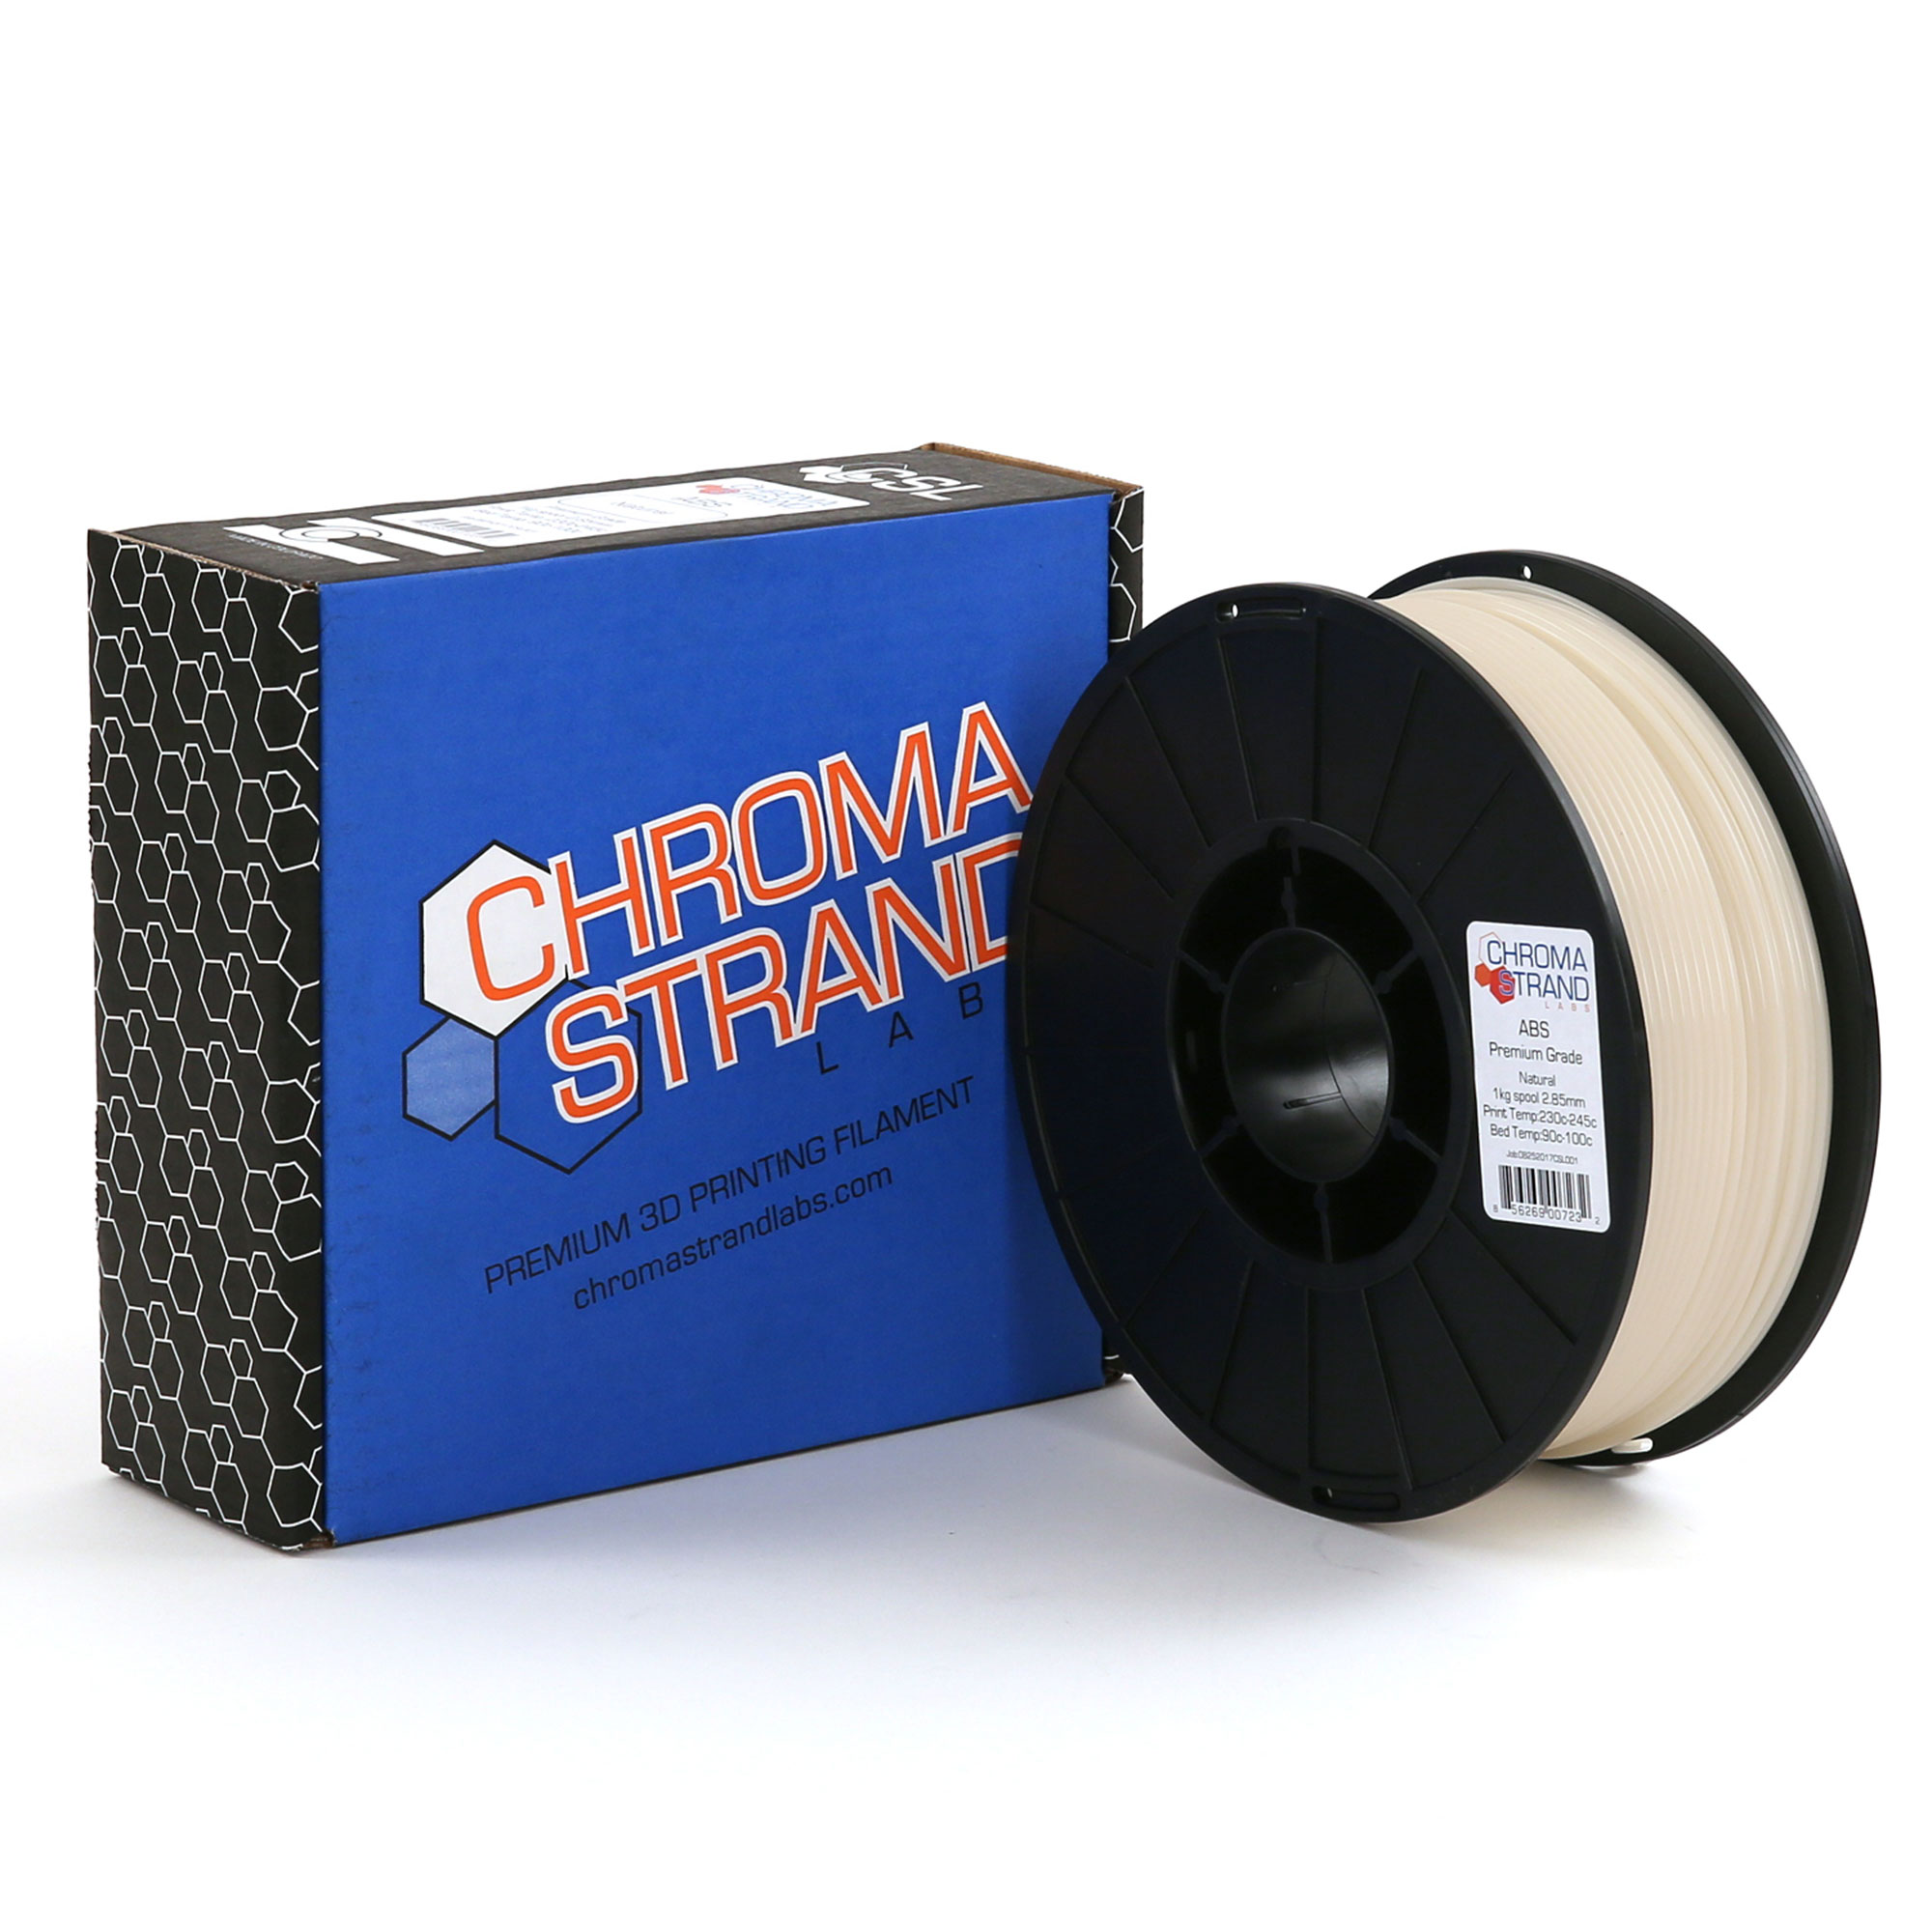 Chroma Strand Abs Filament, Natural, 2.85mm, 1kg Reel